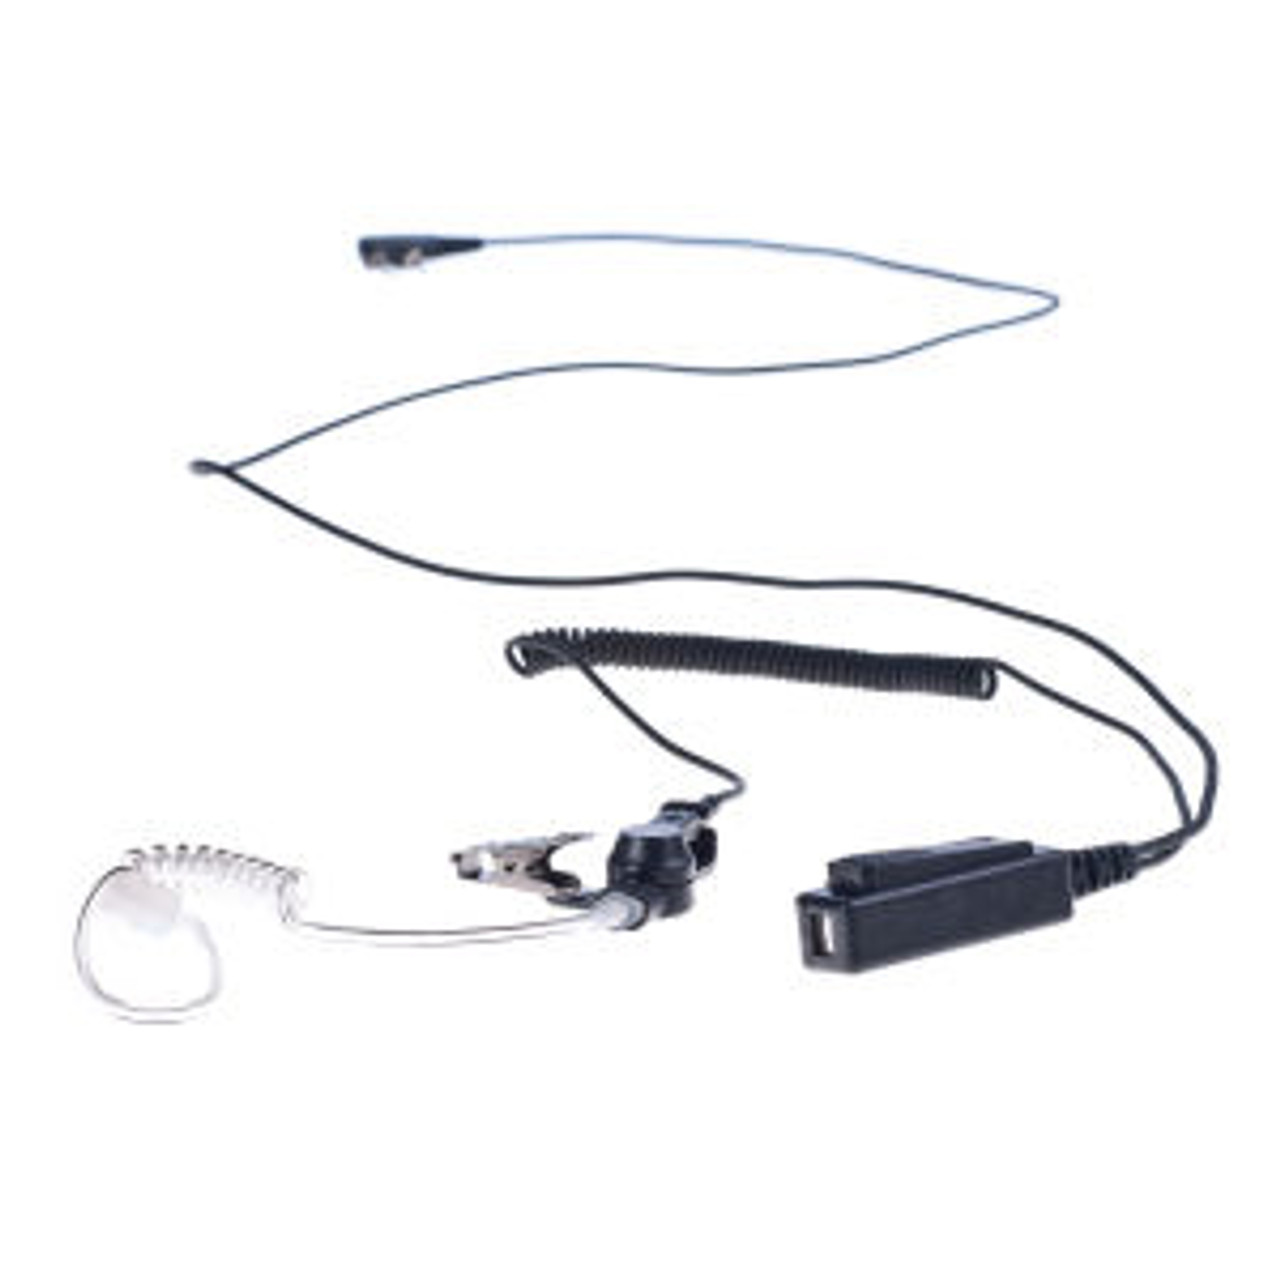 ICOM IC-F51 1-Wire Surveillance Kit